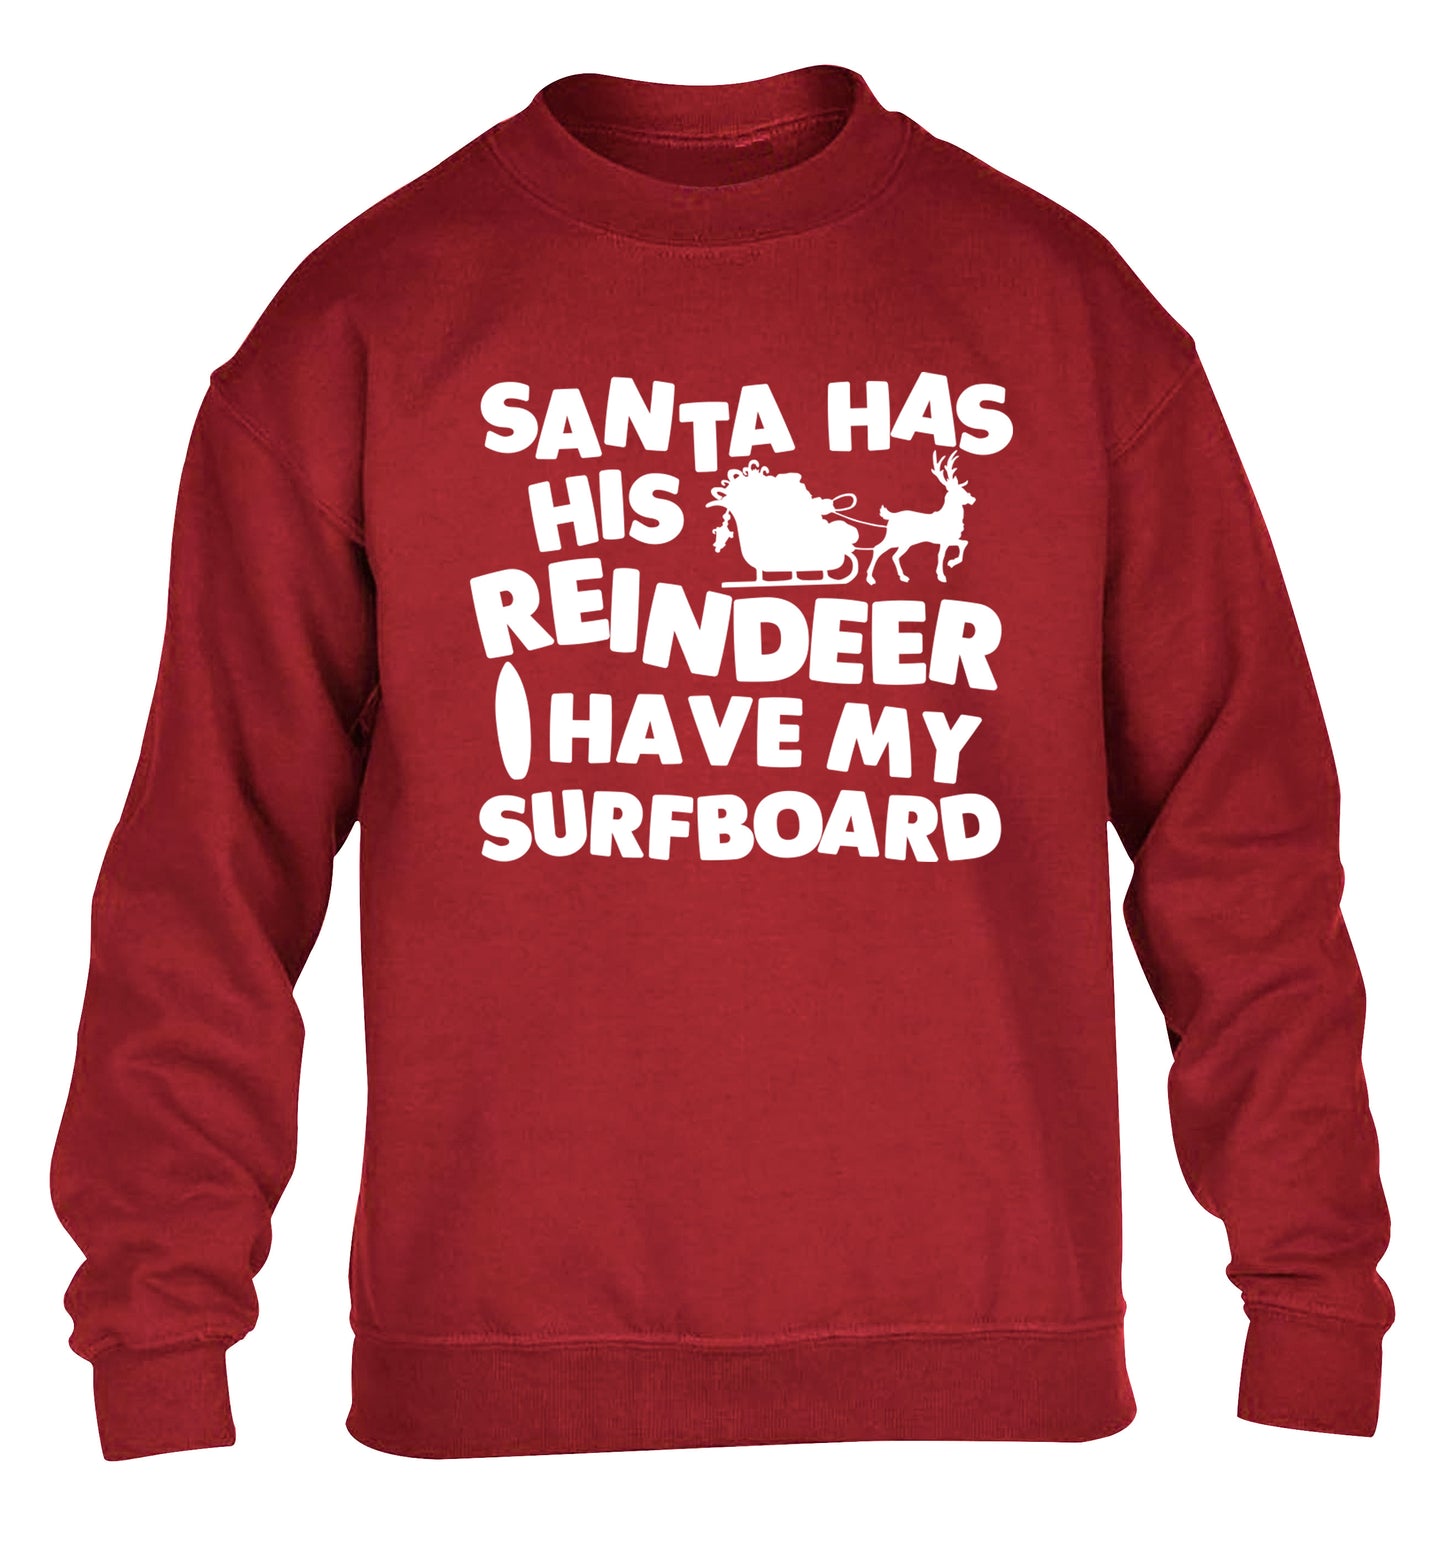 Santa has his reindeer I have my surfboard children's grey sweater 12-14 Years